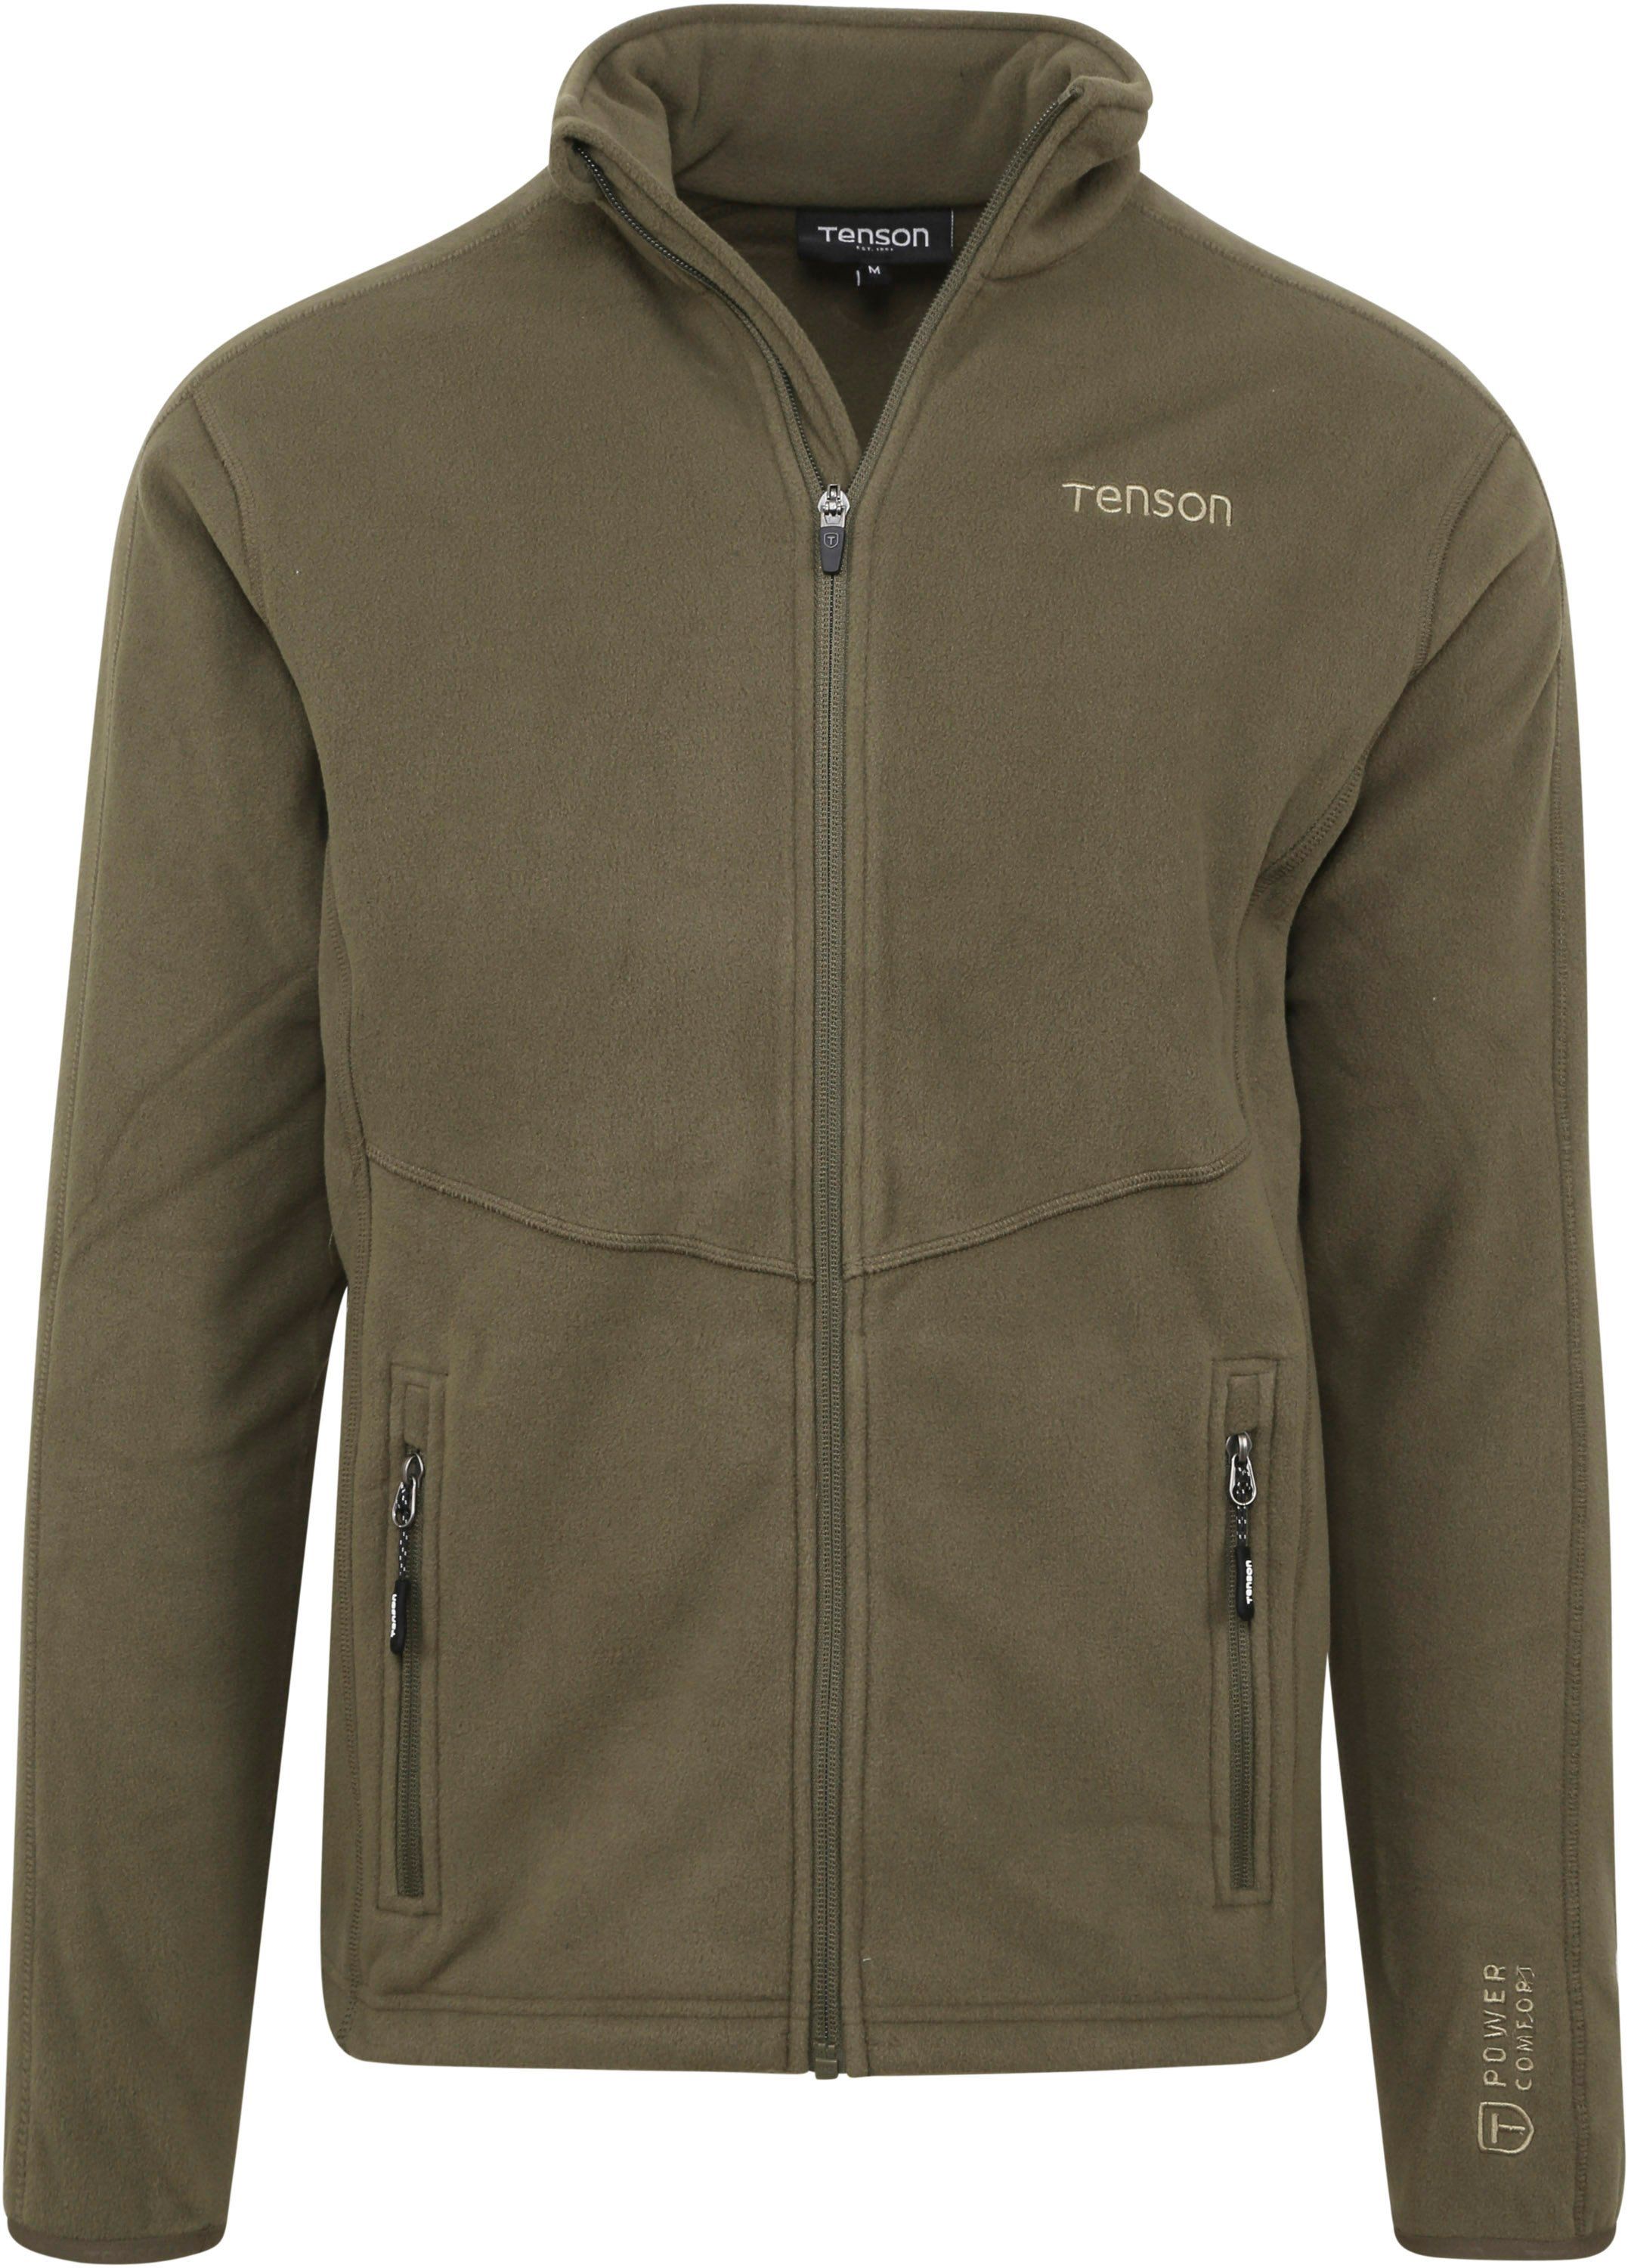 Tenson Miracle Fleece Jacket Olive Green Dark Green size M